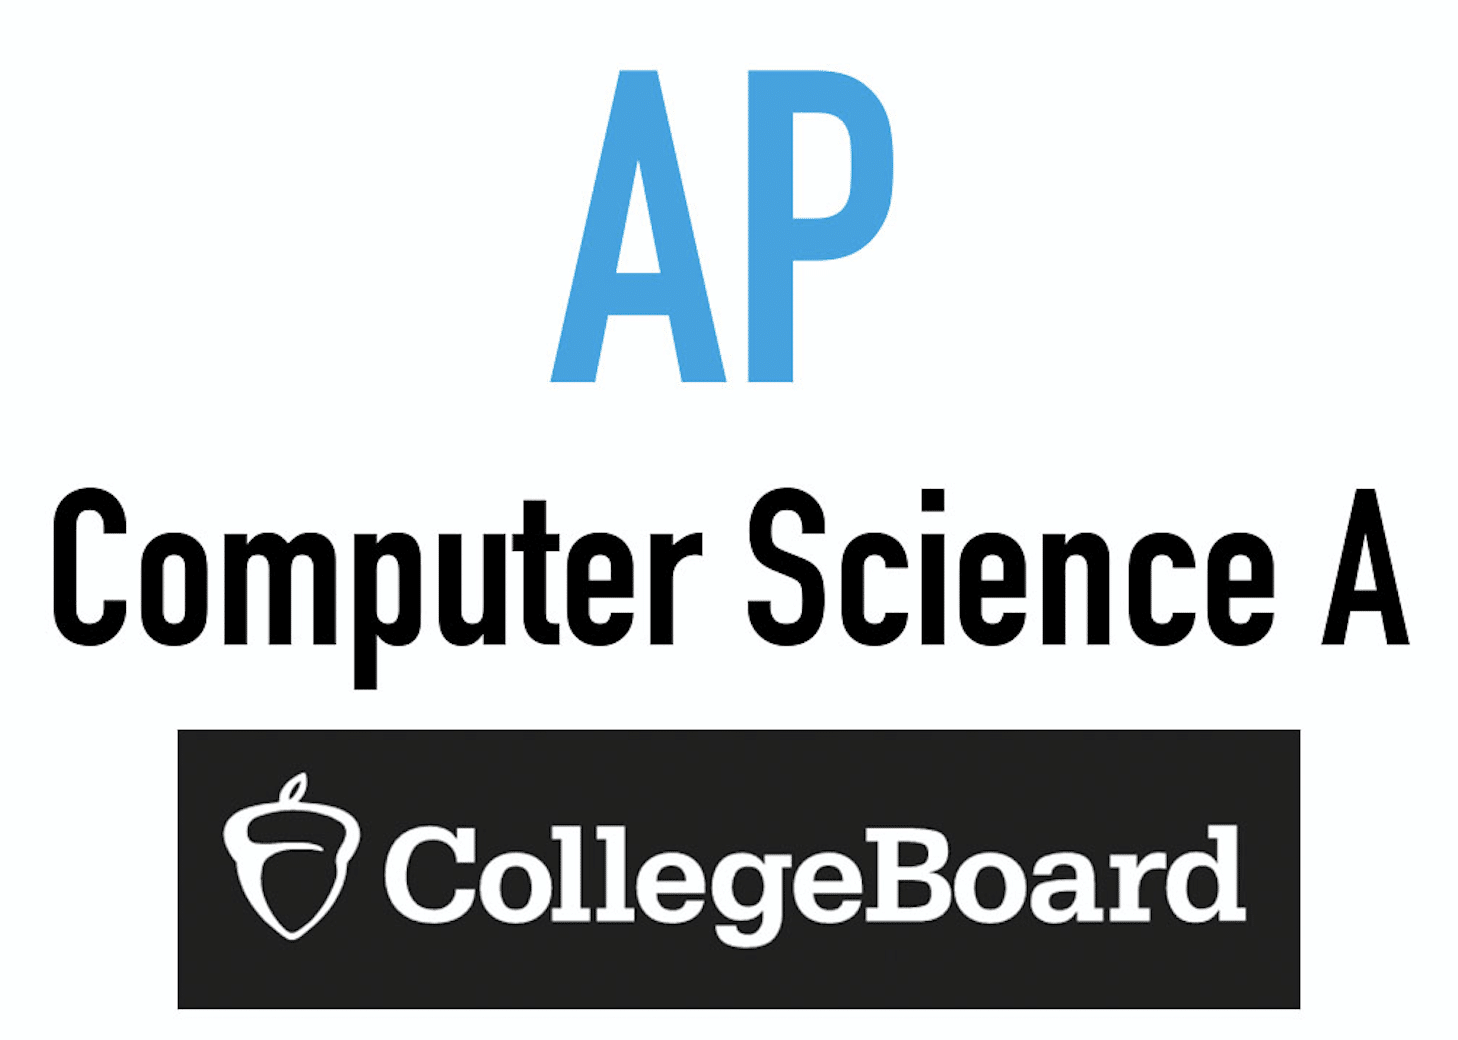 AP Computer Science Exam Preparation Course